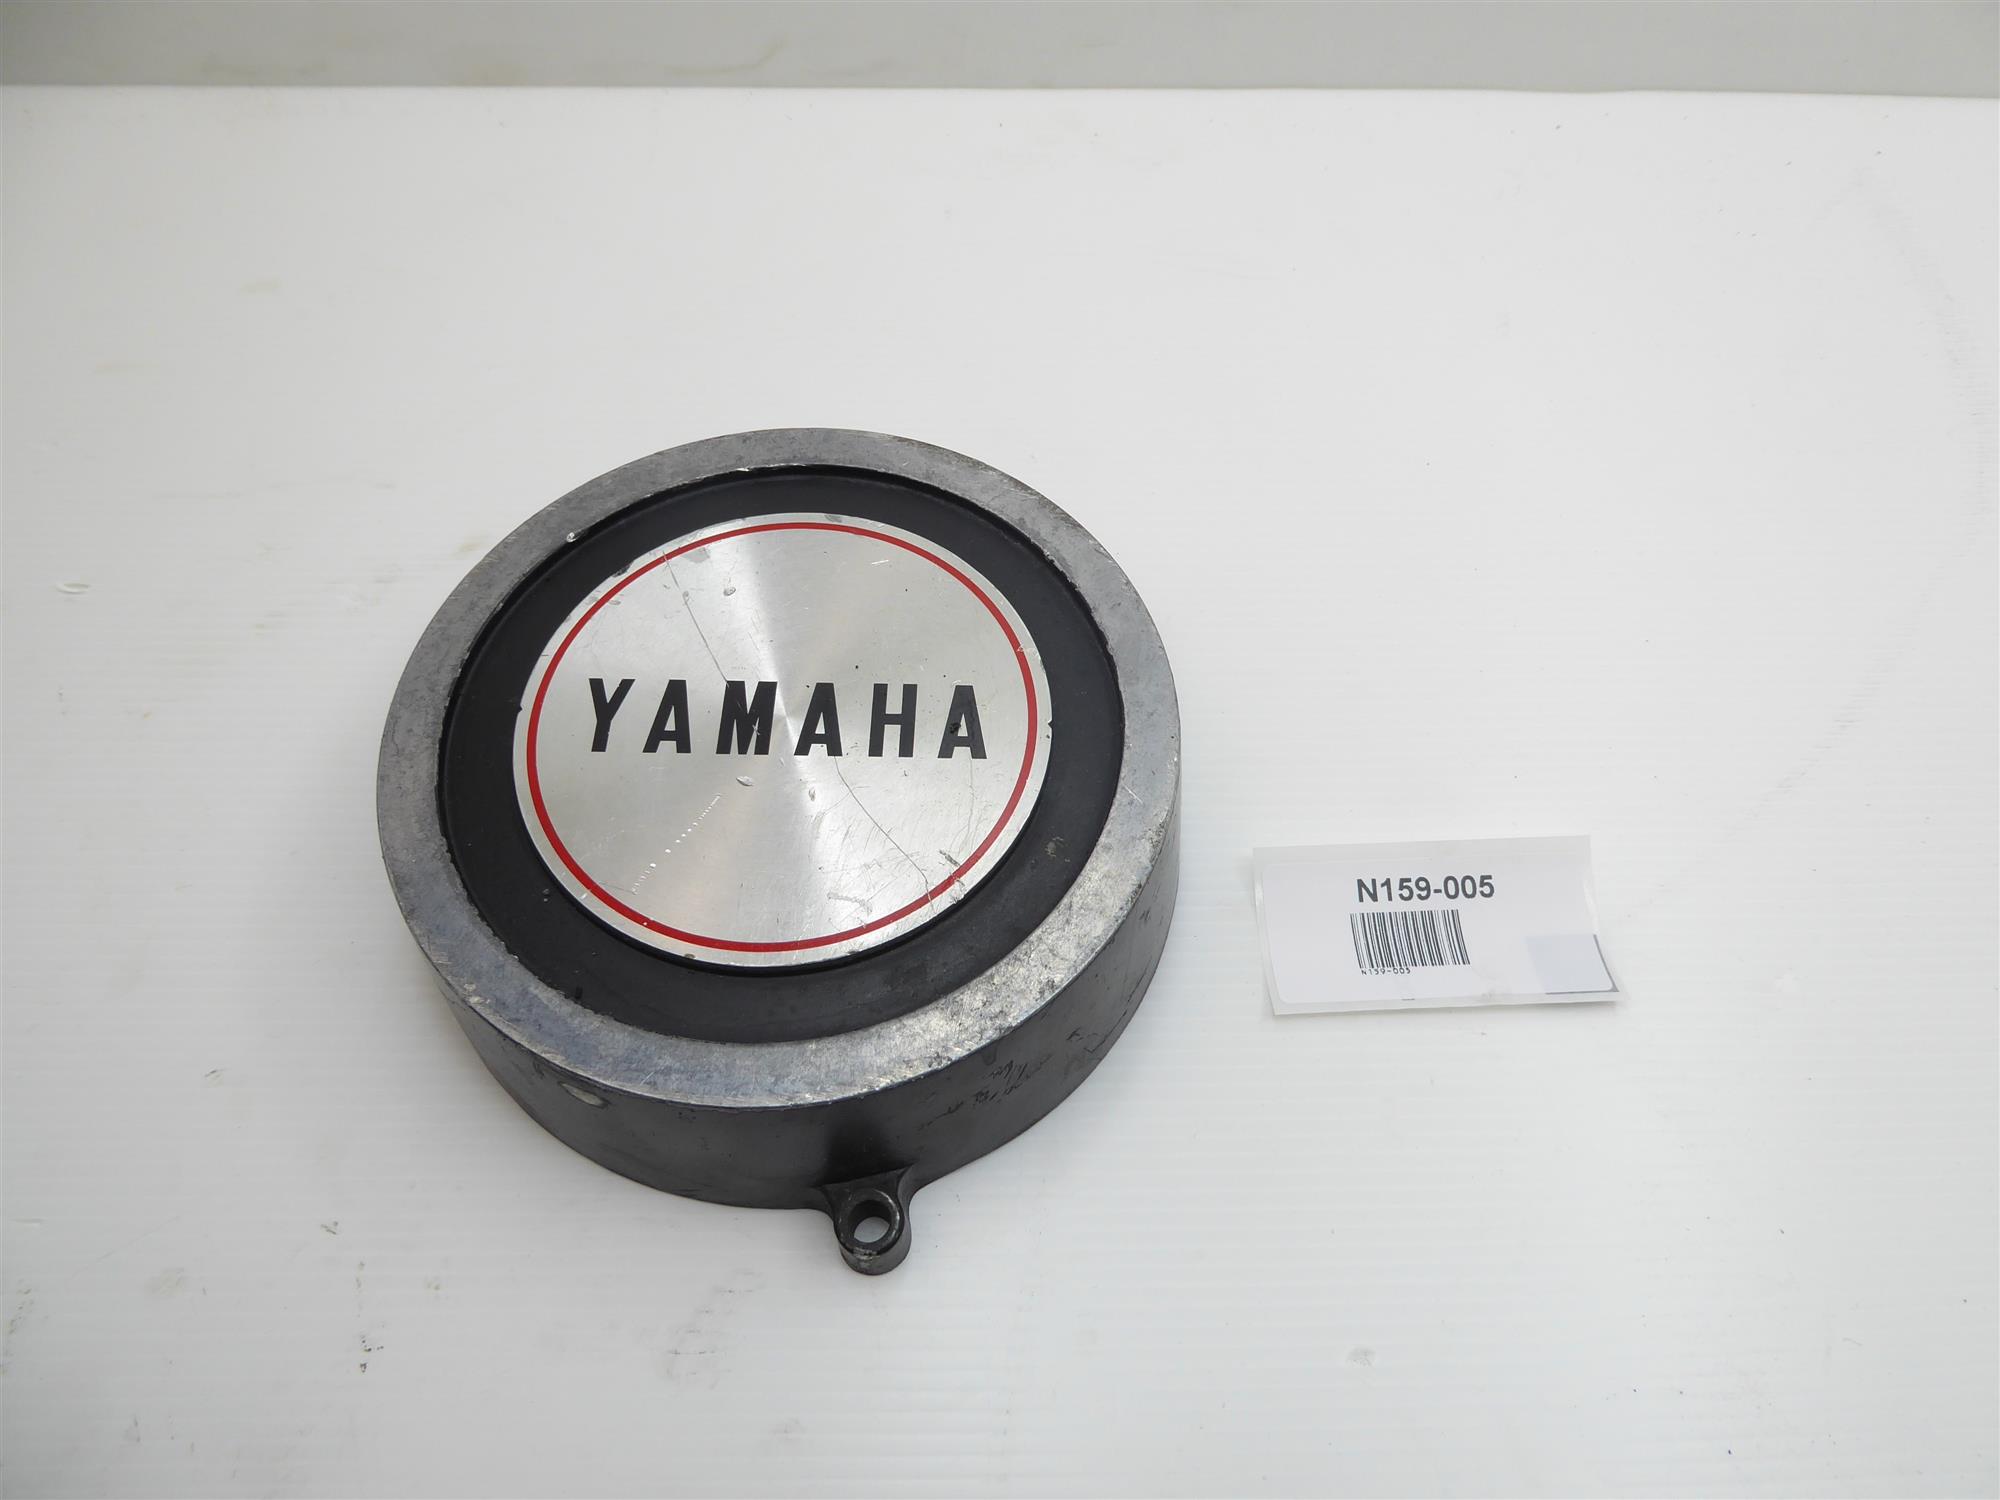 Yamaha RD 250 73-79 Lichtmaschinenabdeckung 360-15415-01-00